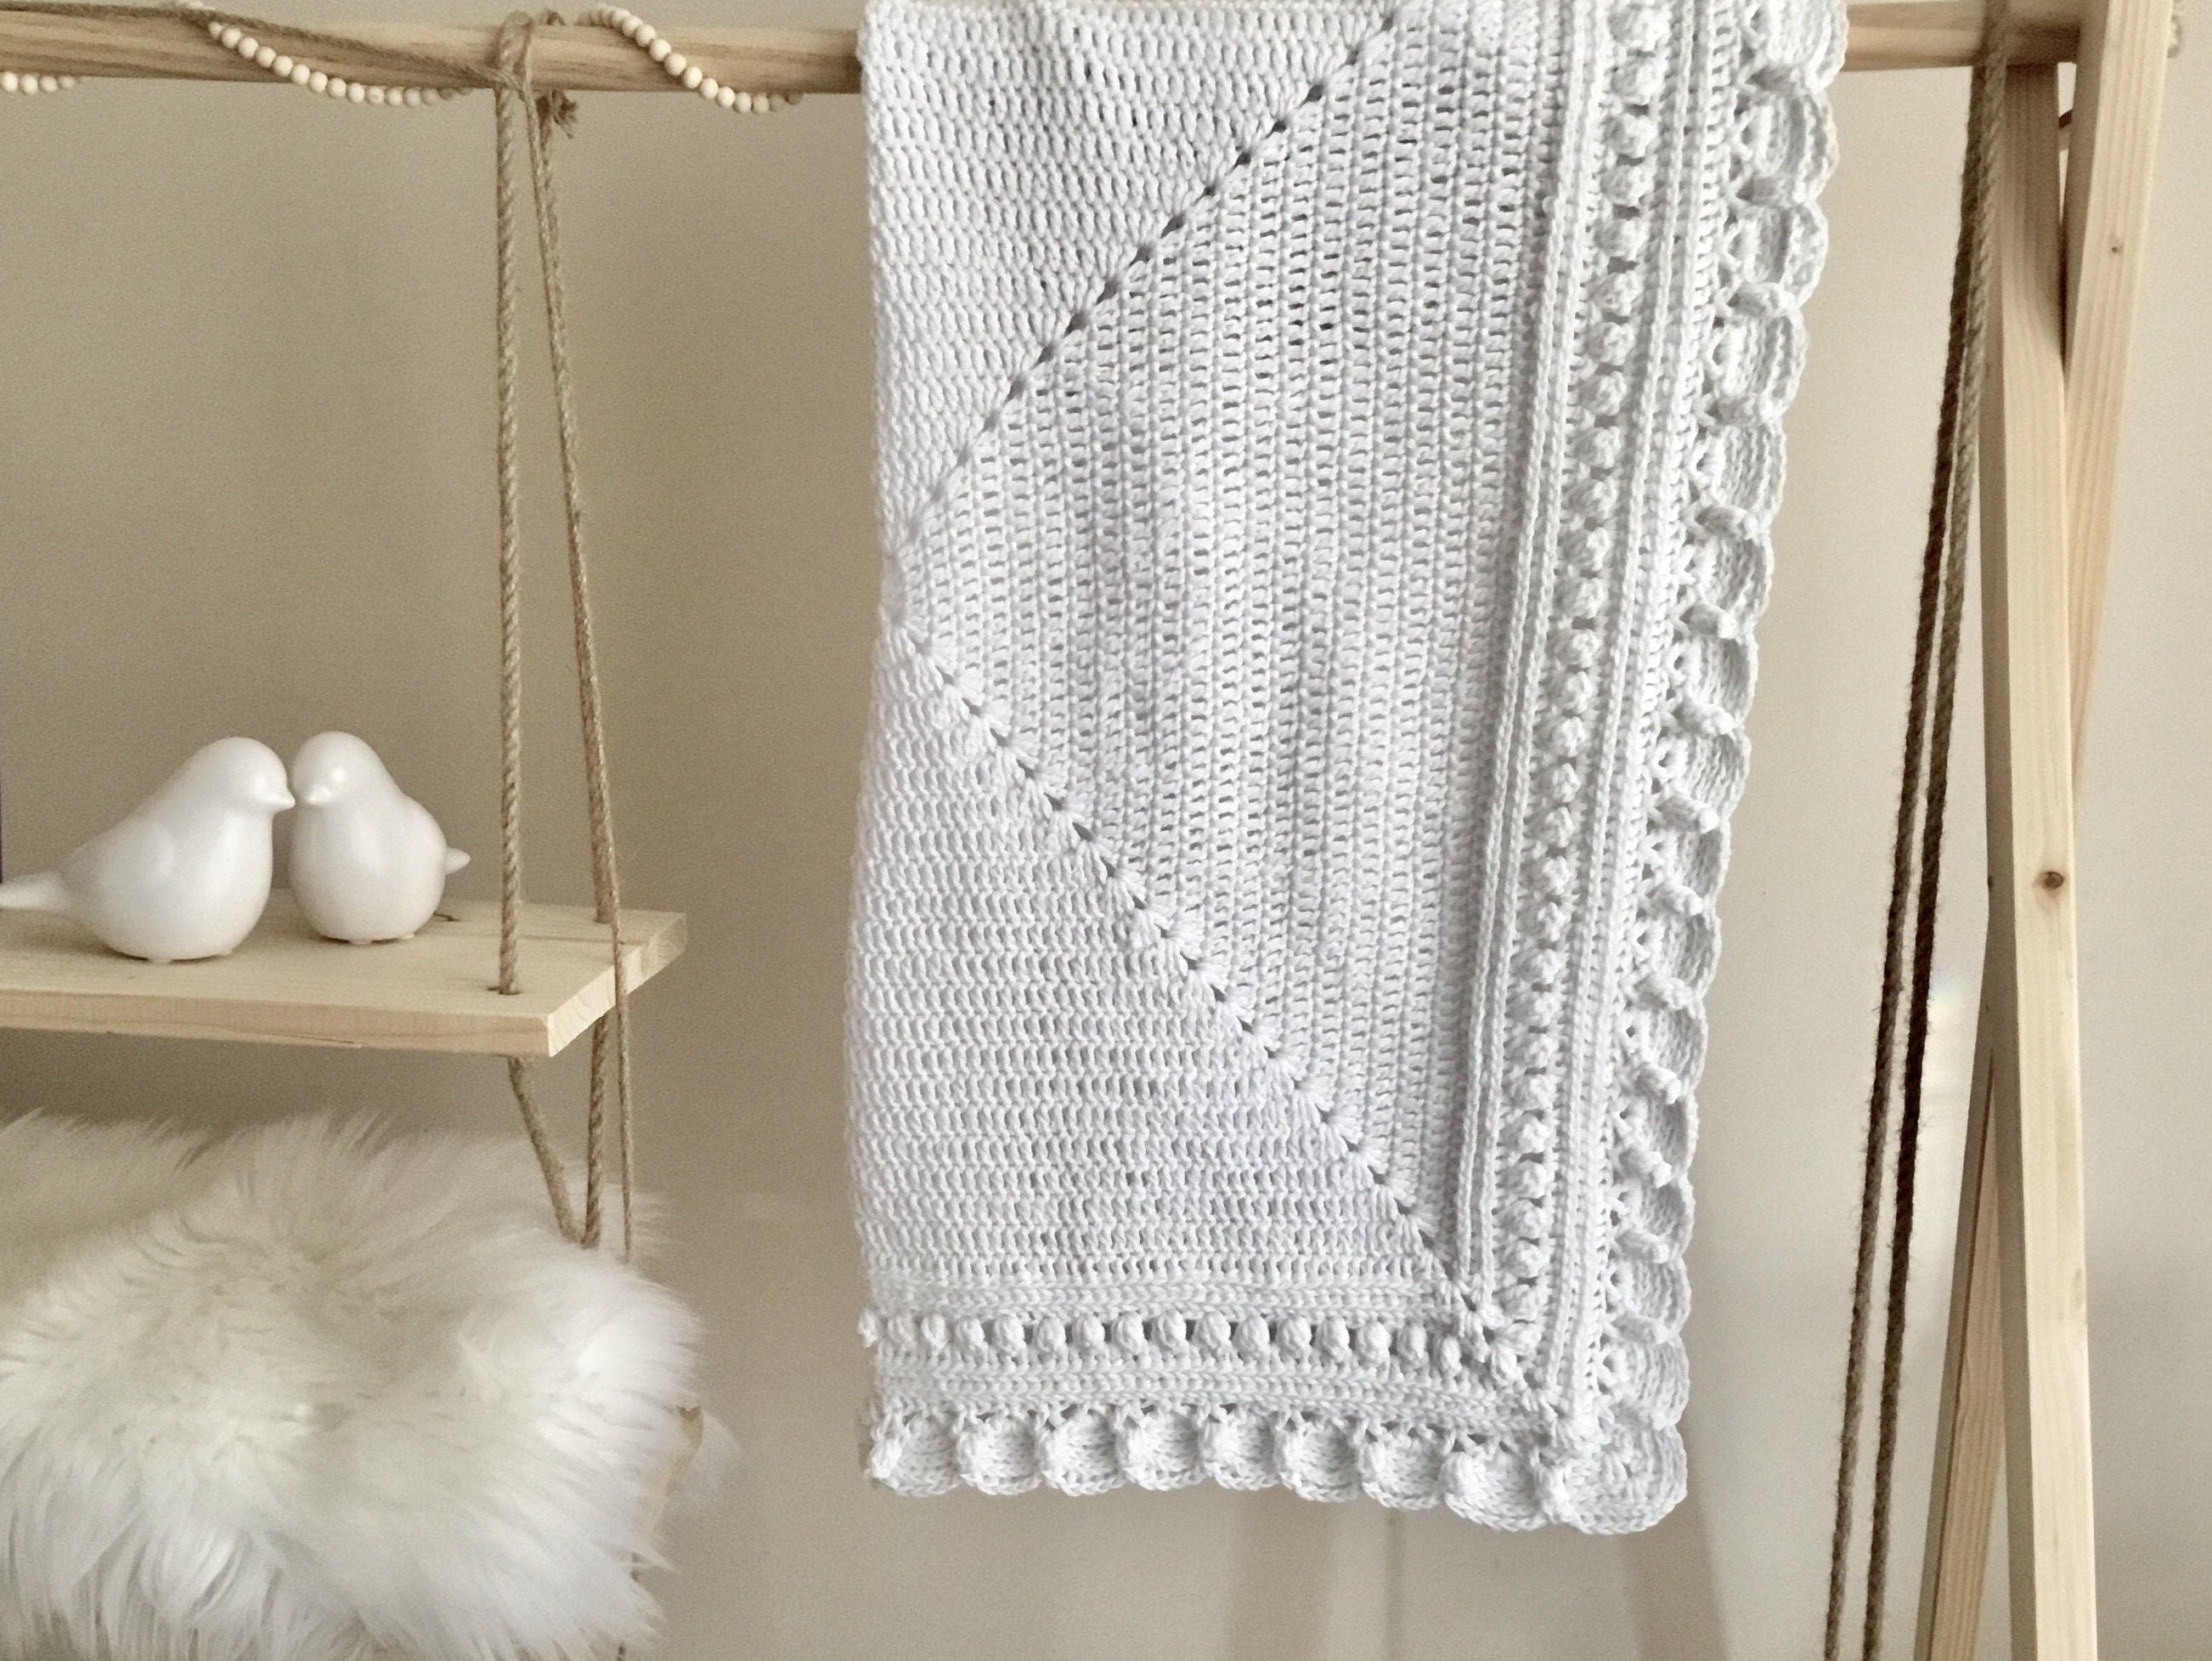 Crochet a Classic Baby Blanket, Free Pattern Tutorial